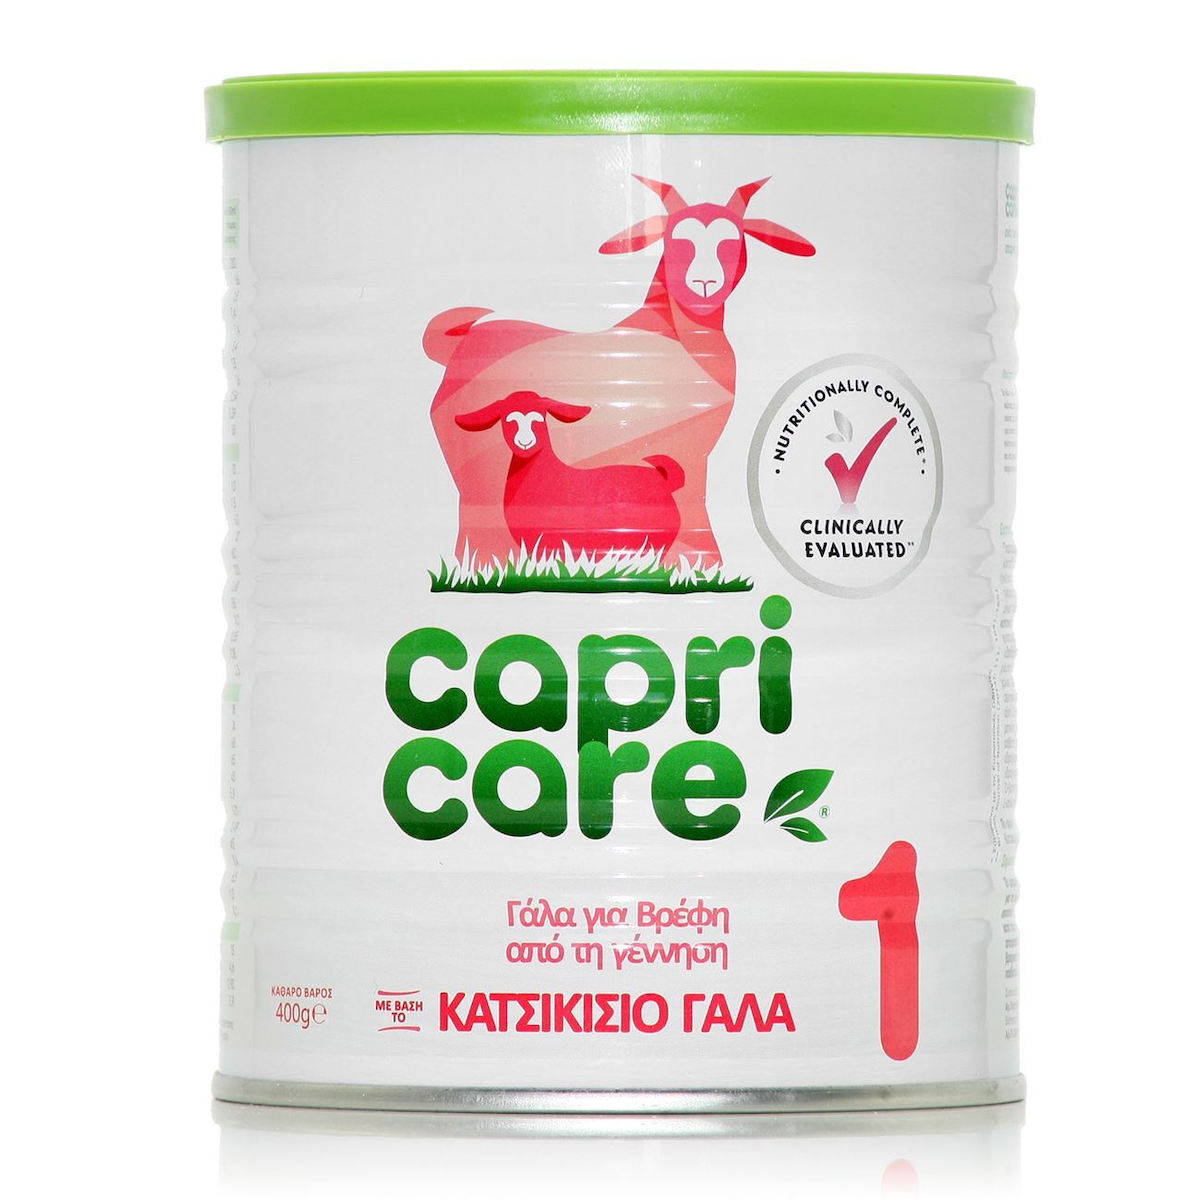 Capricare® - Goats Milk